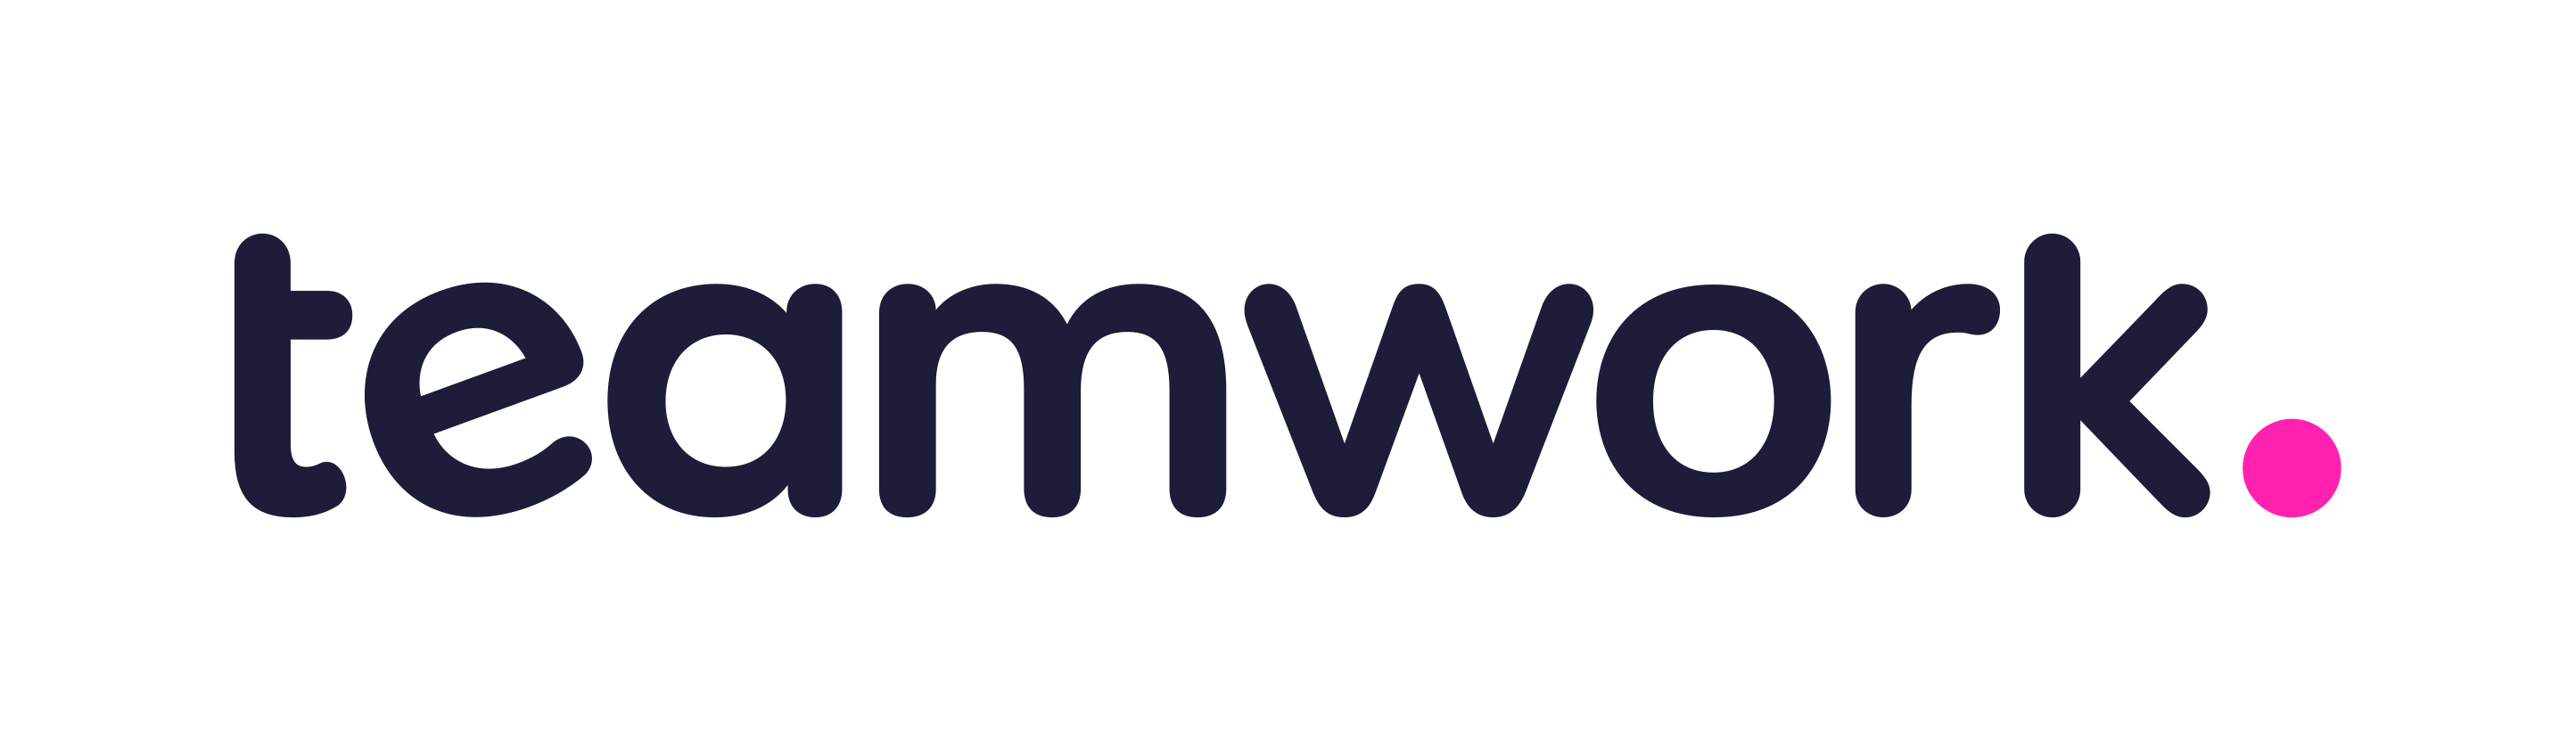 Teamwork Scale Logo2